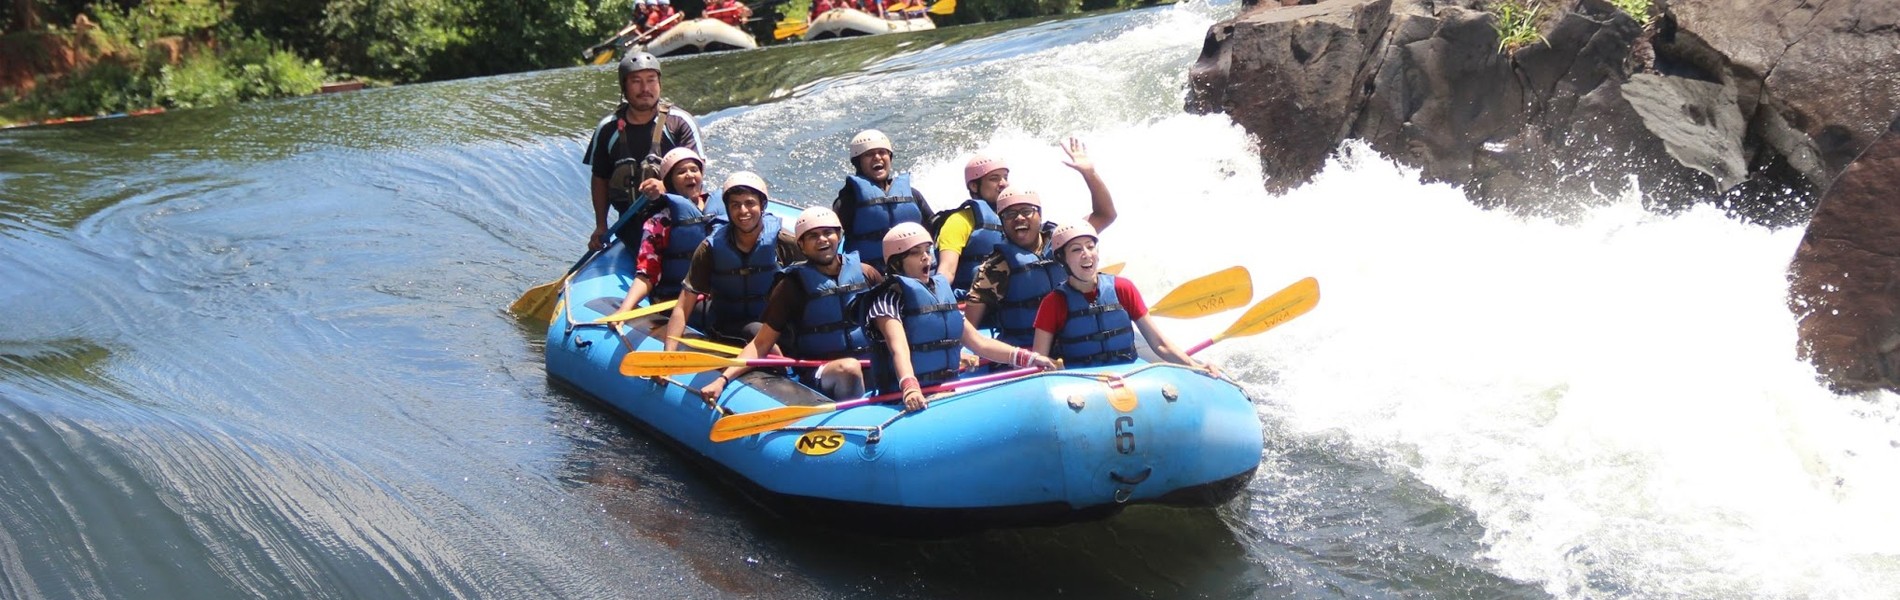 river adventure tour dandeli